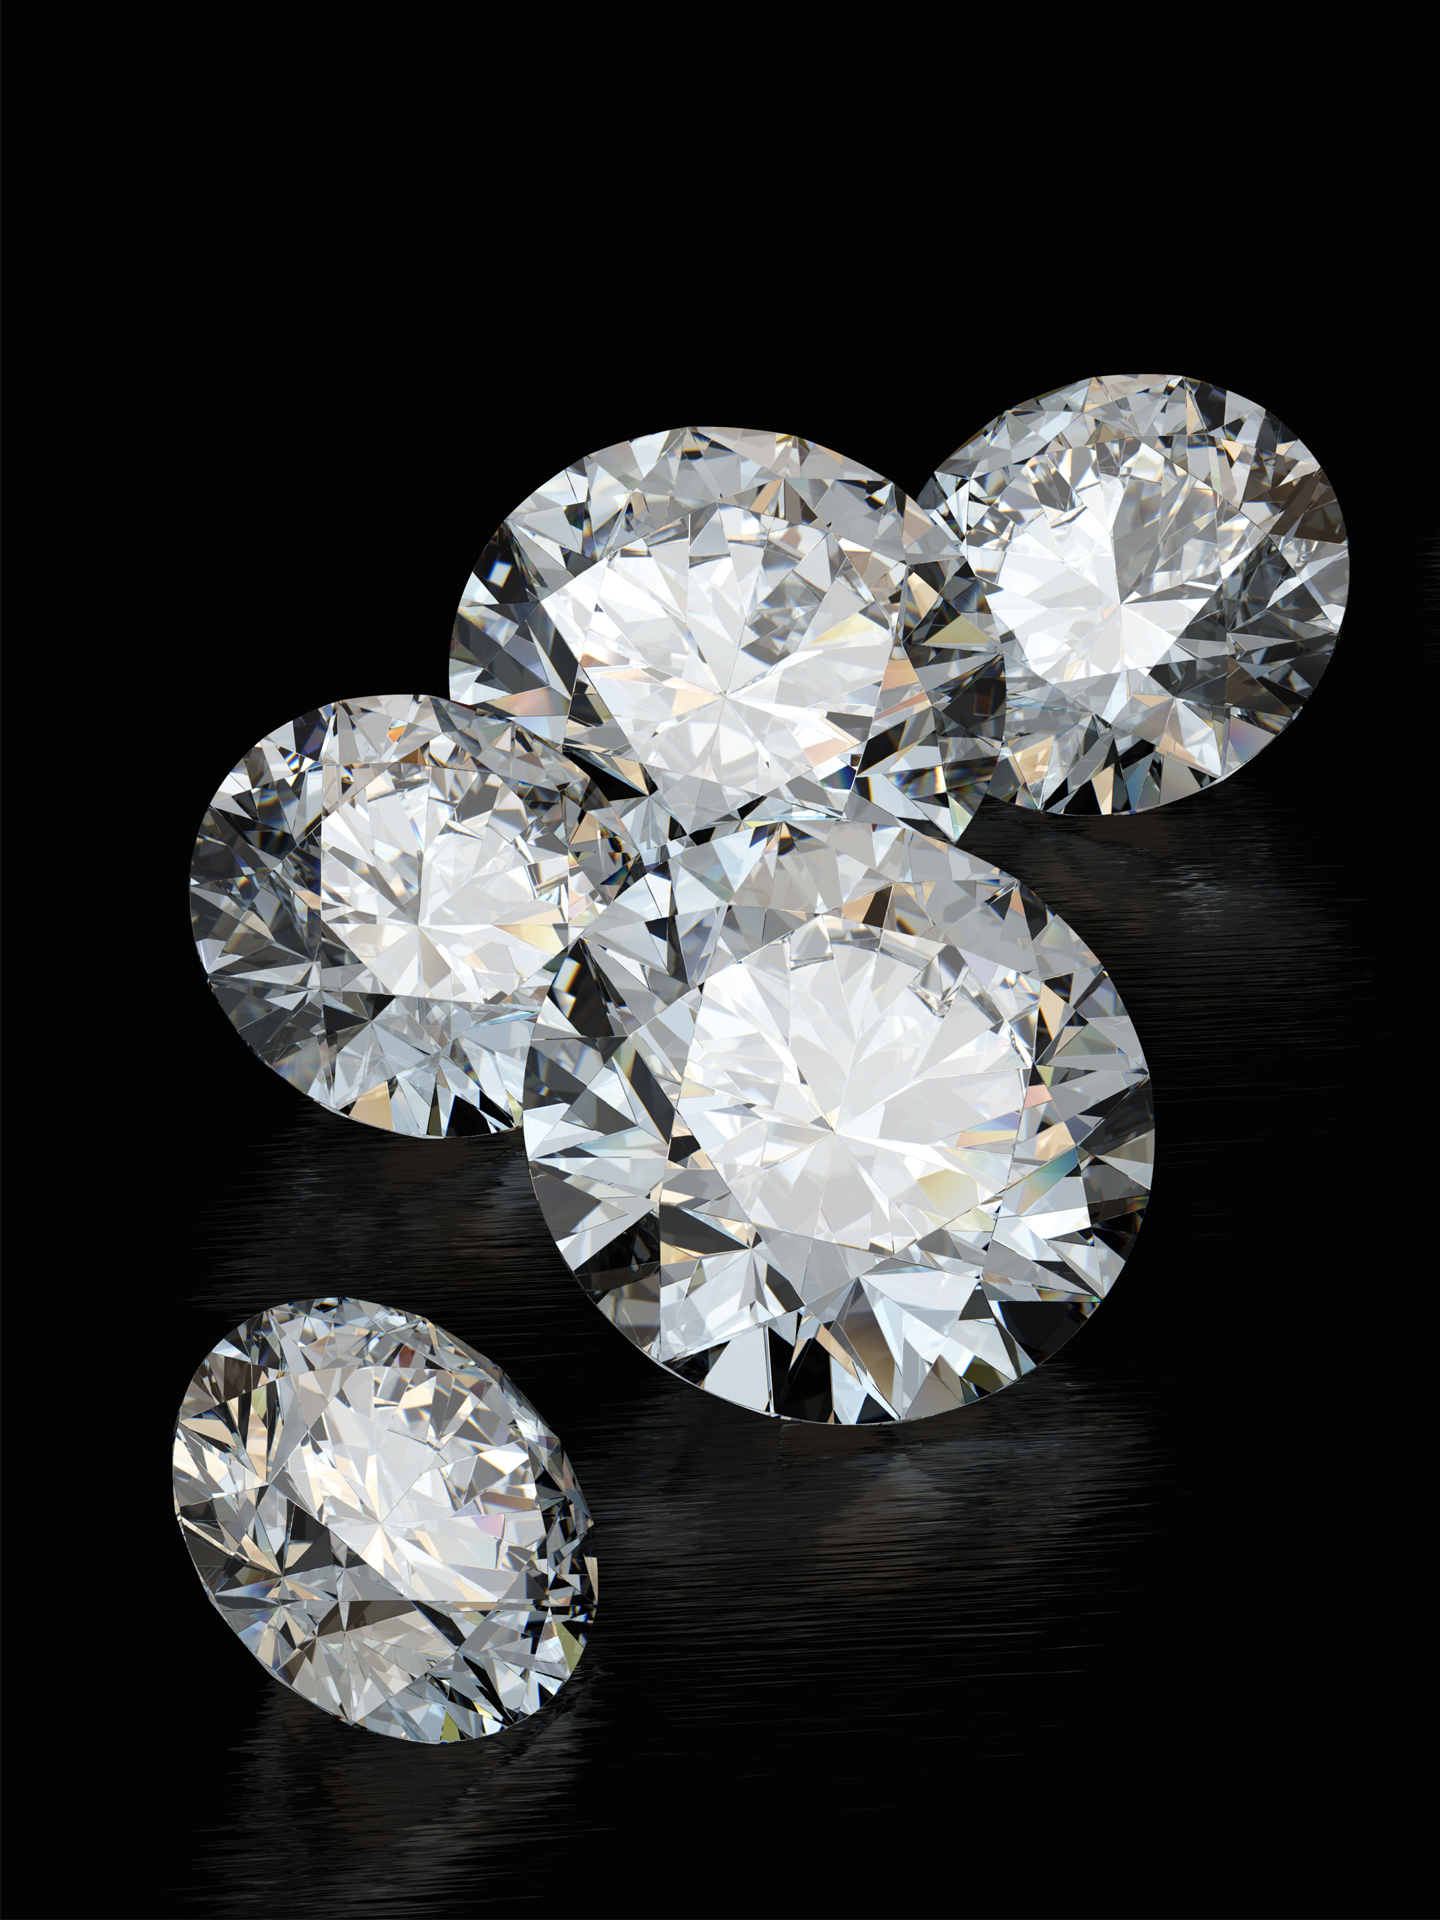 genesis diamond buyers louisville